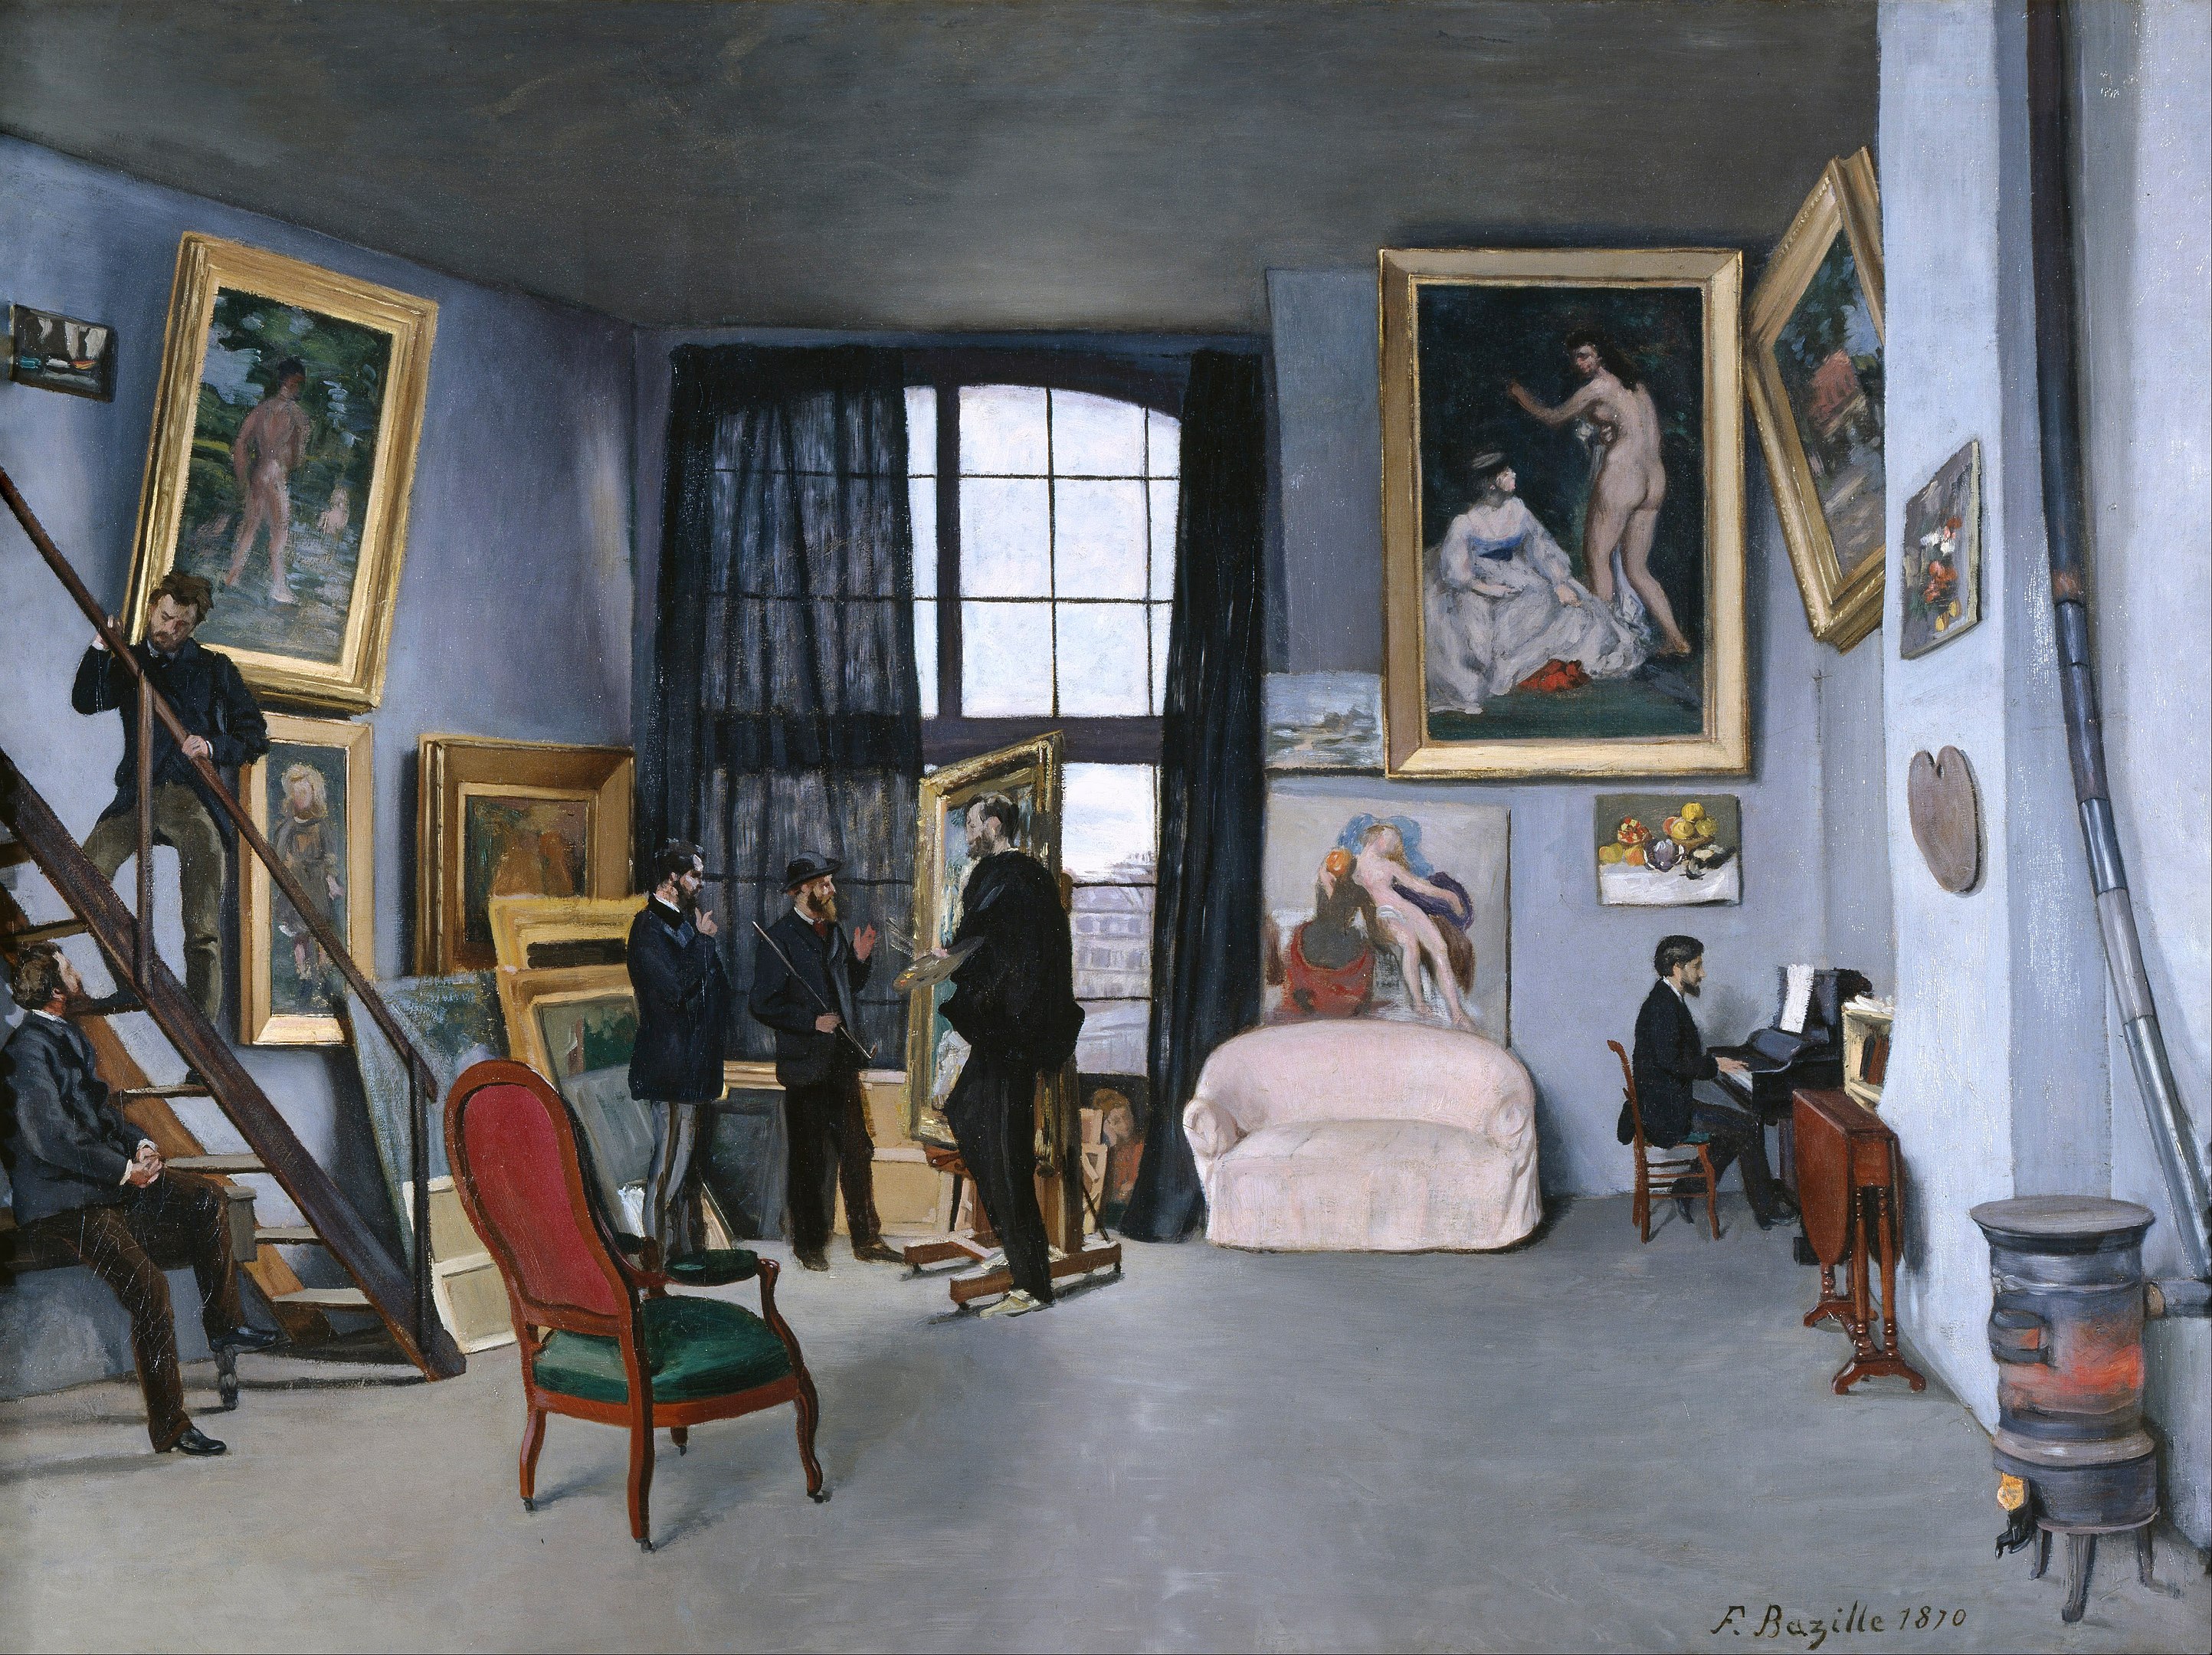 Bazille's Studio by Frédéric Bazille - 1870 - 98 x 128 cm Musée d'Orsay